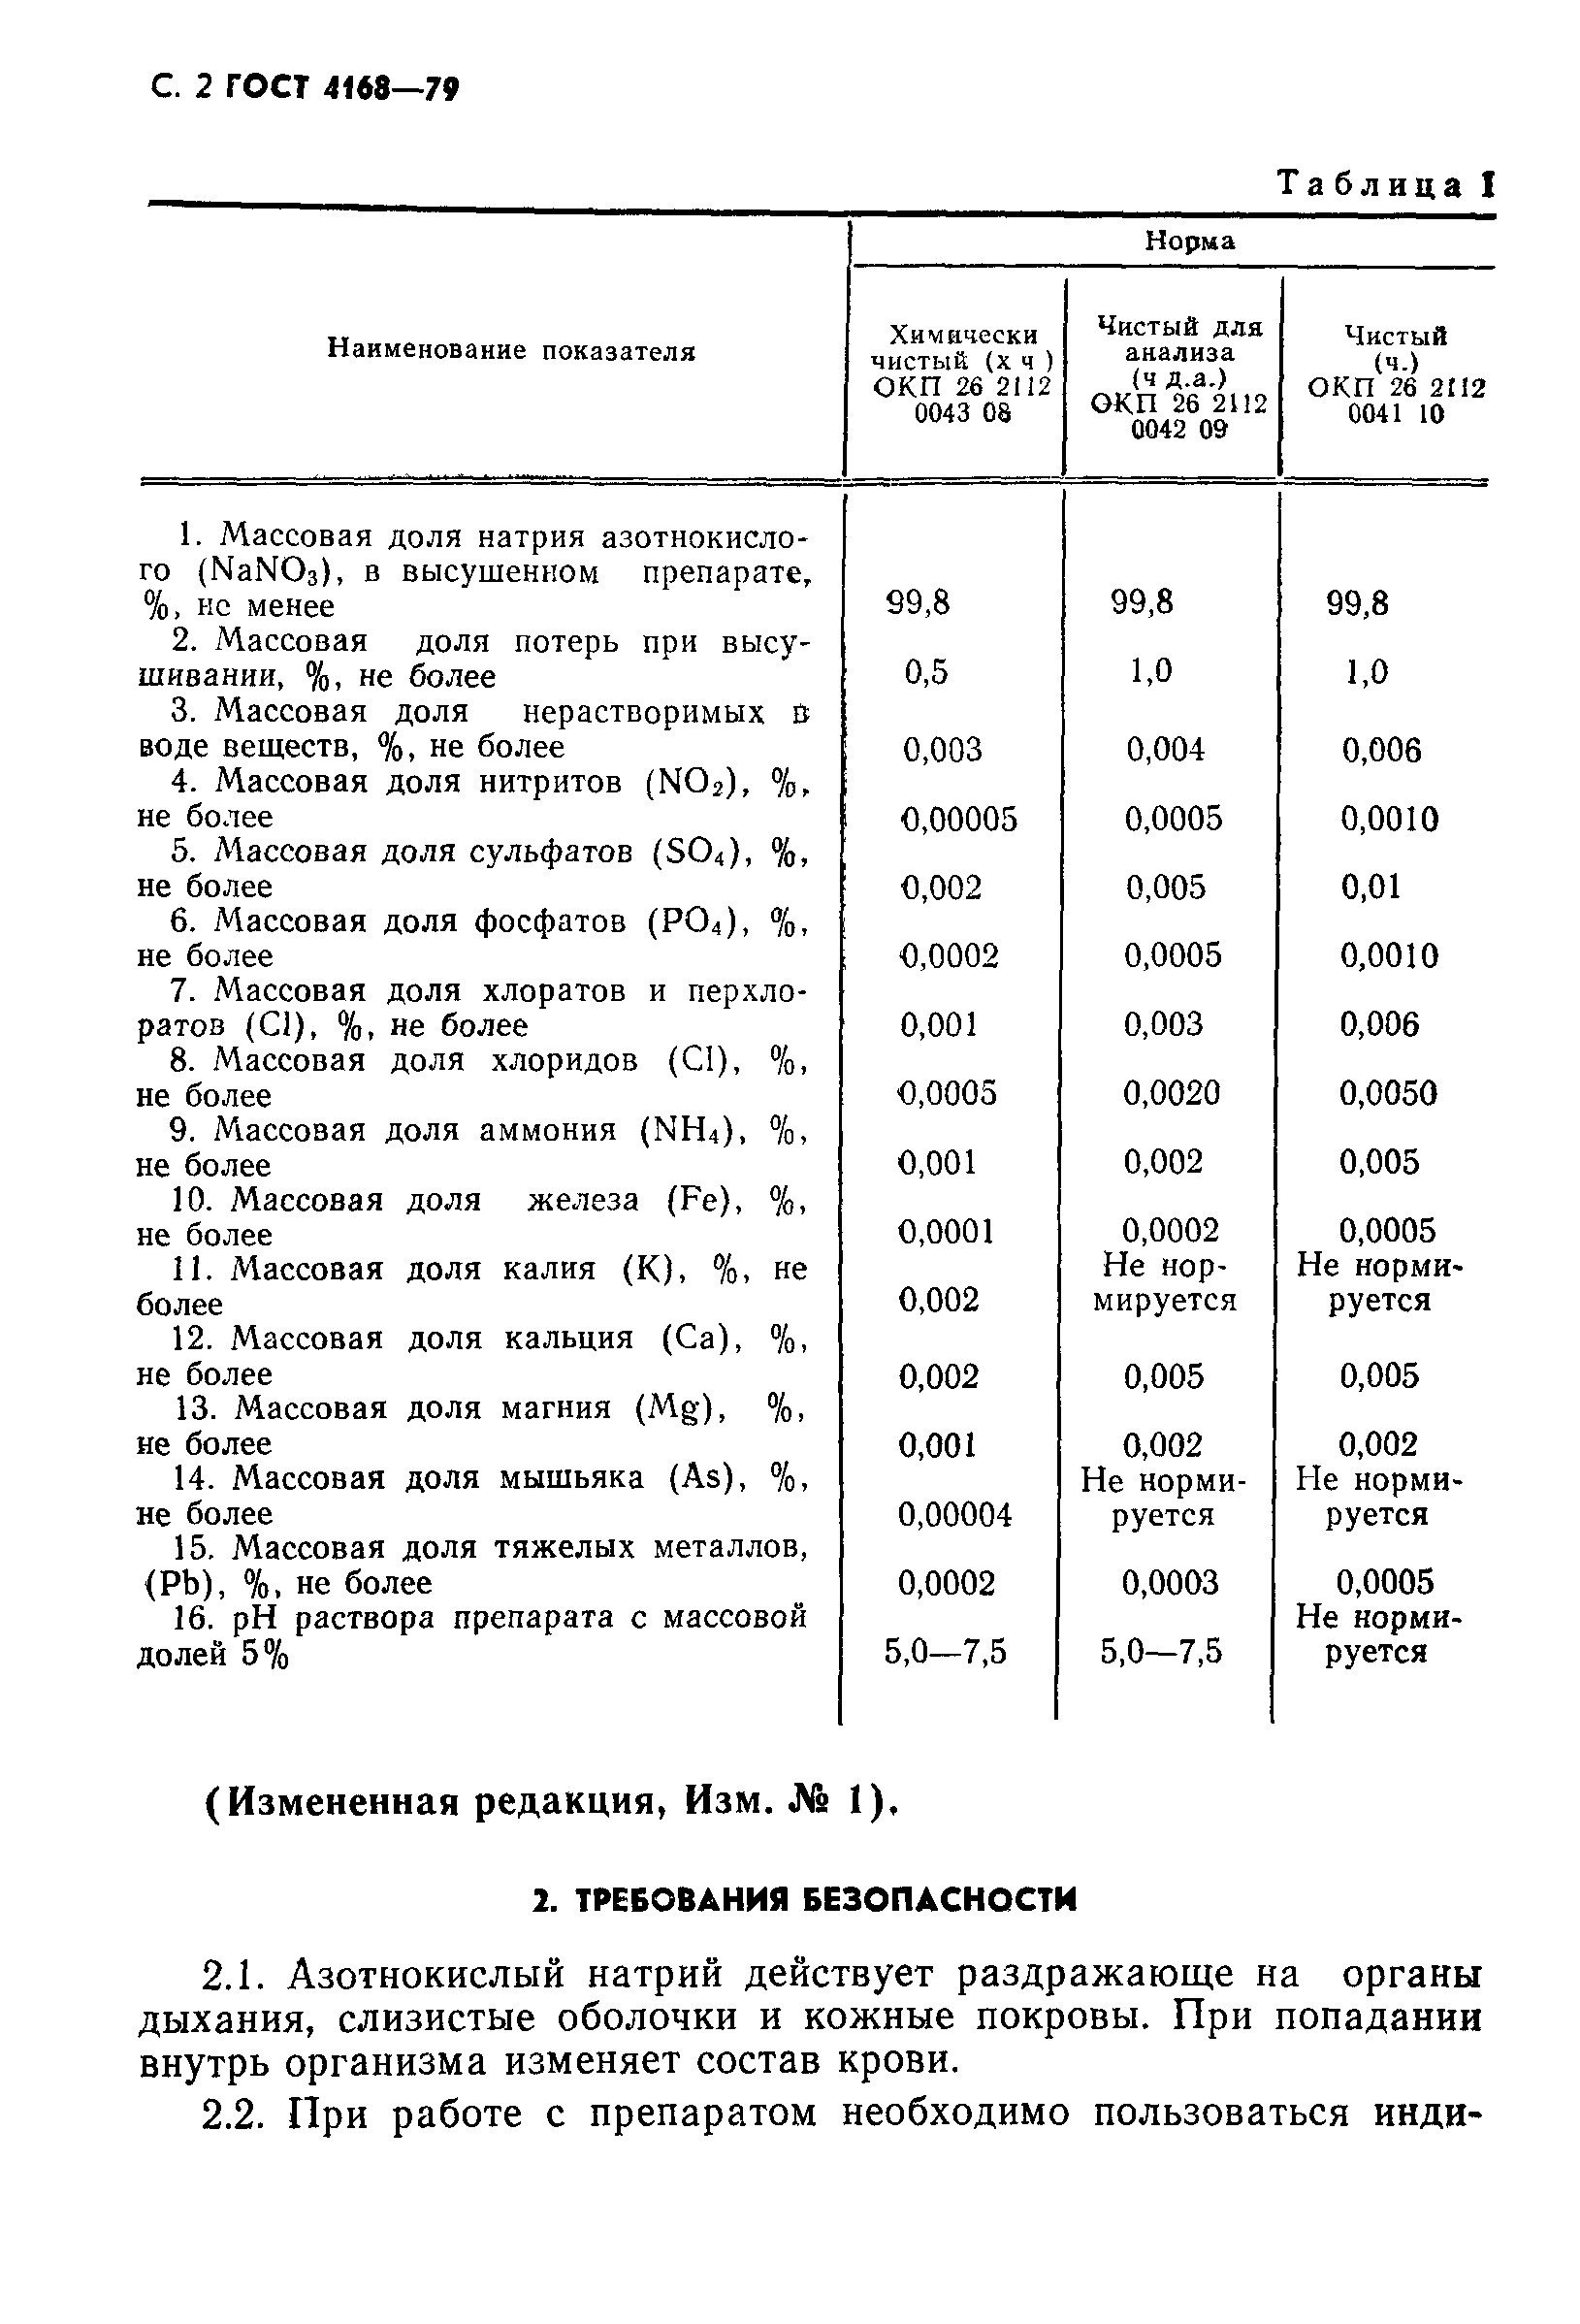 ГОСТ 4168-79